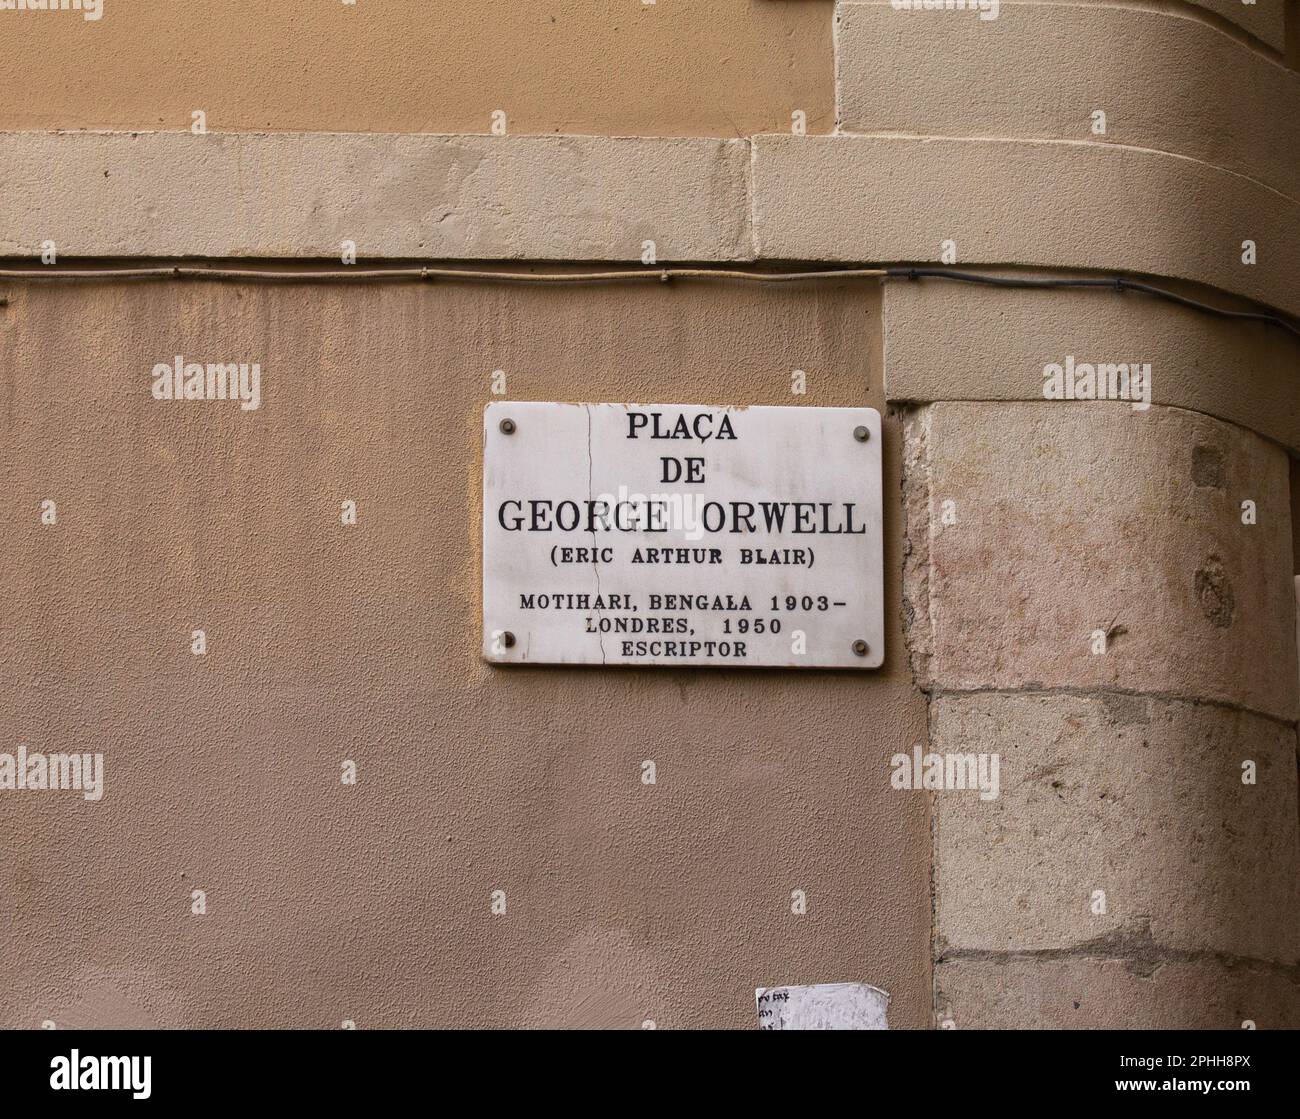 Placa De George Orwell, Barcelona, Spain Stock Photo